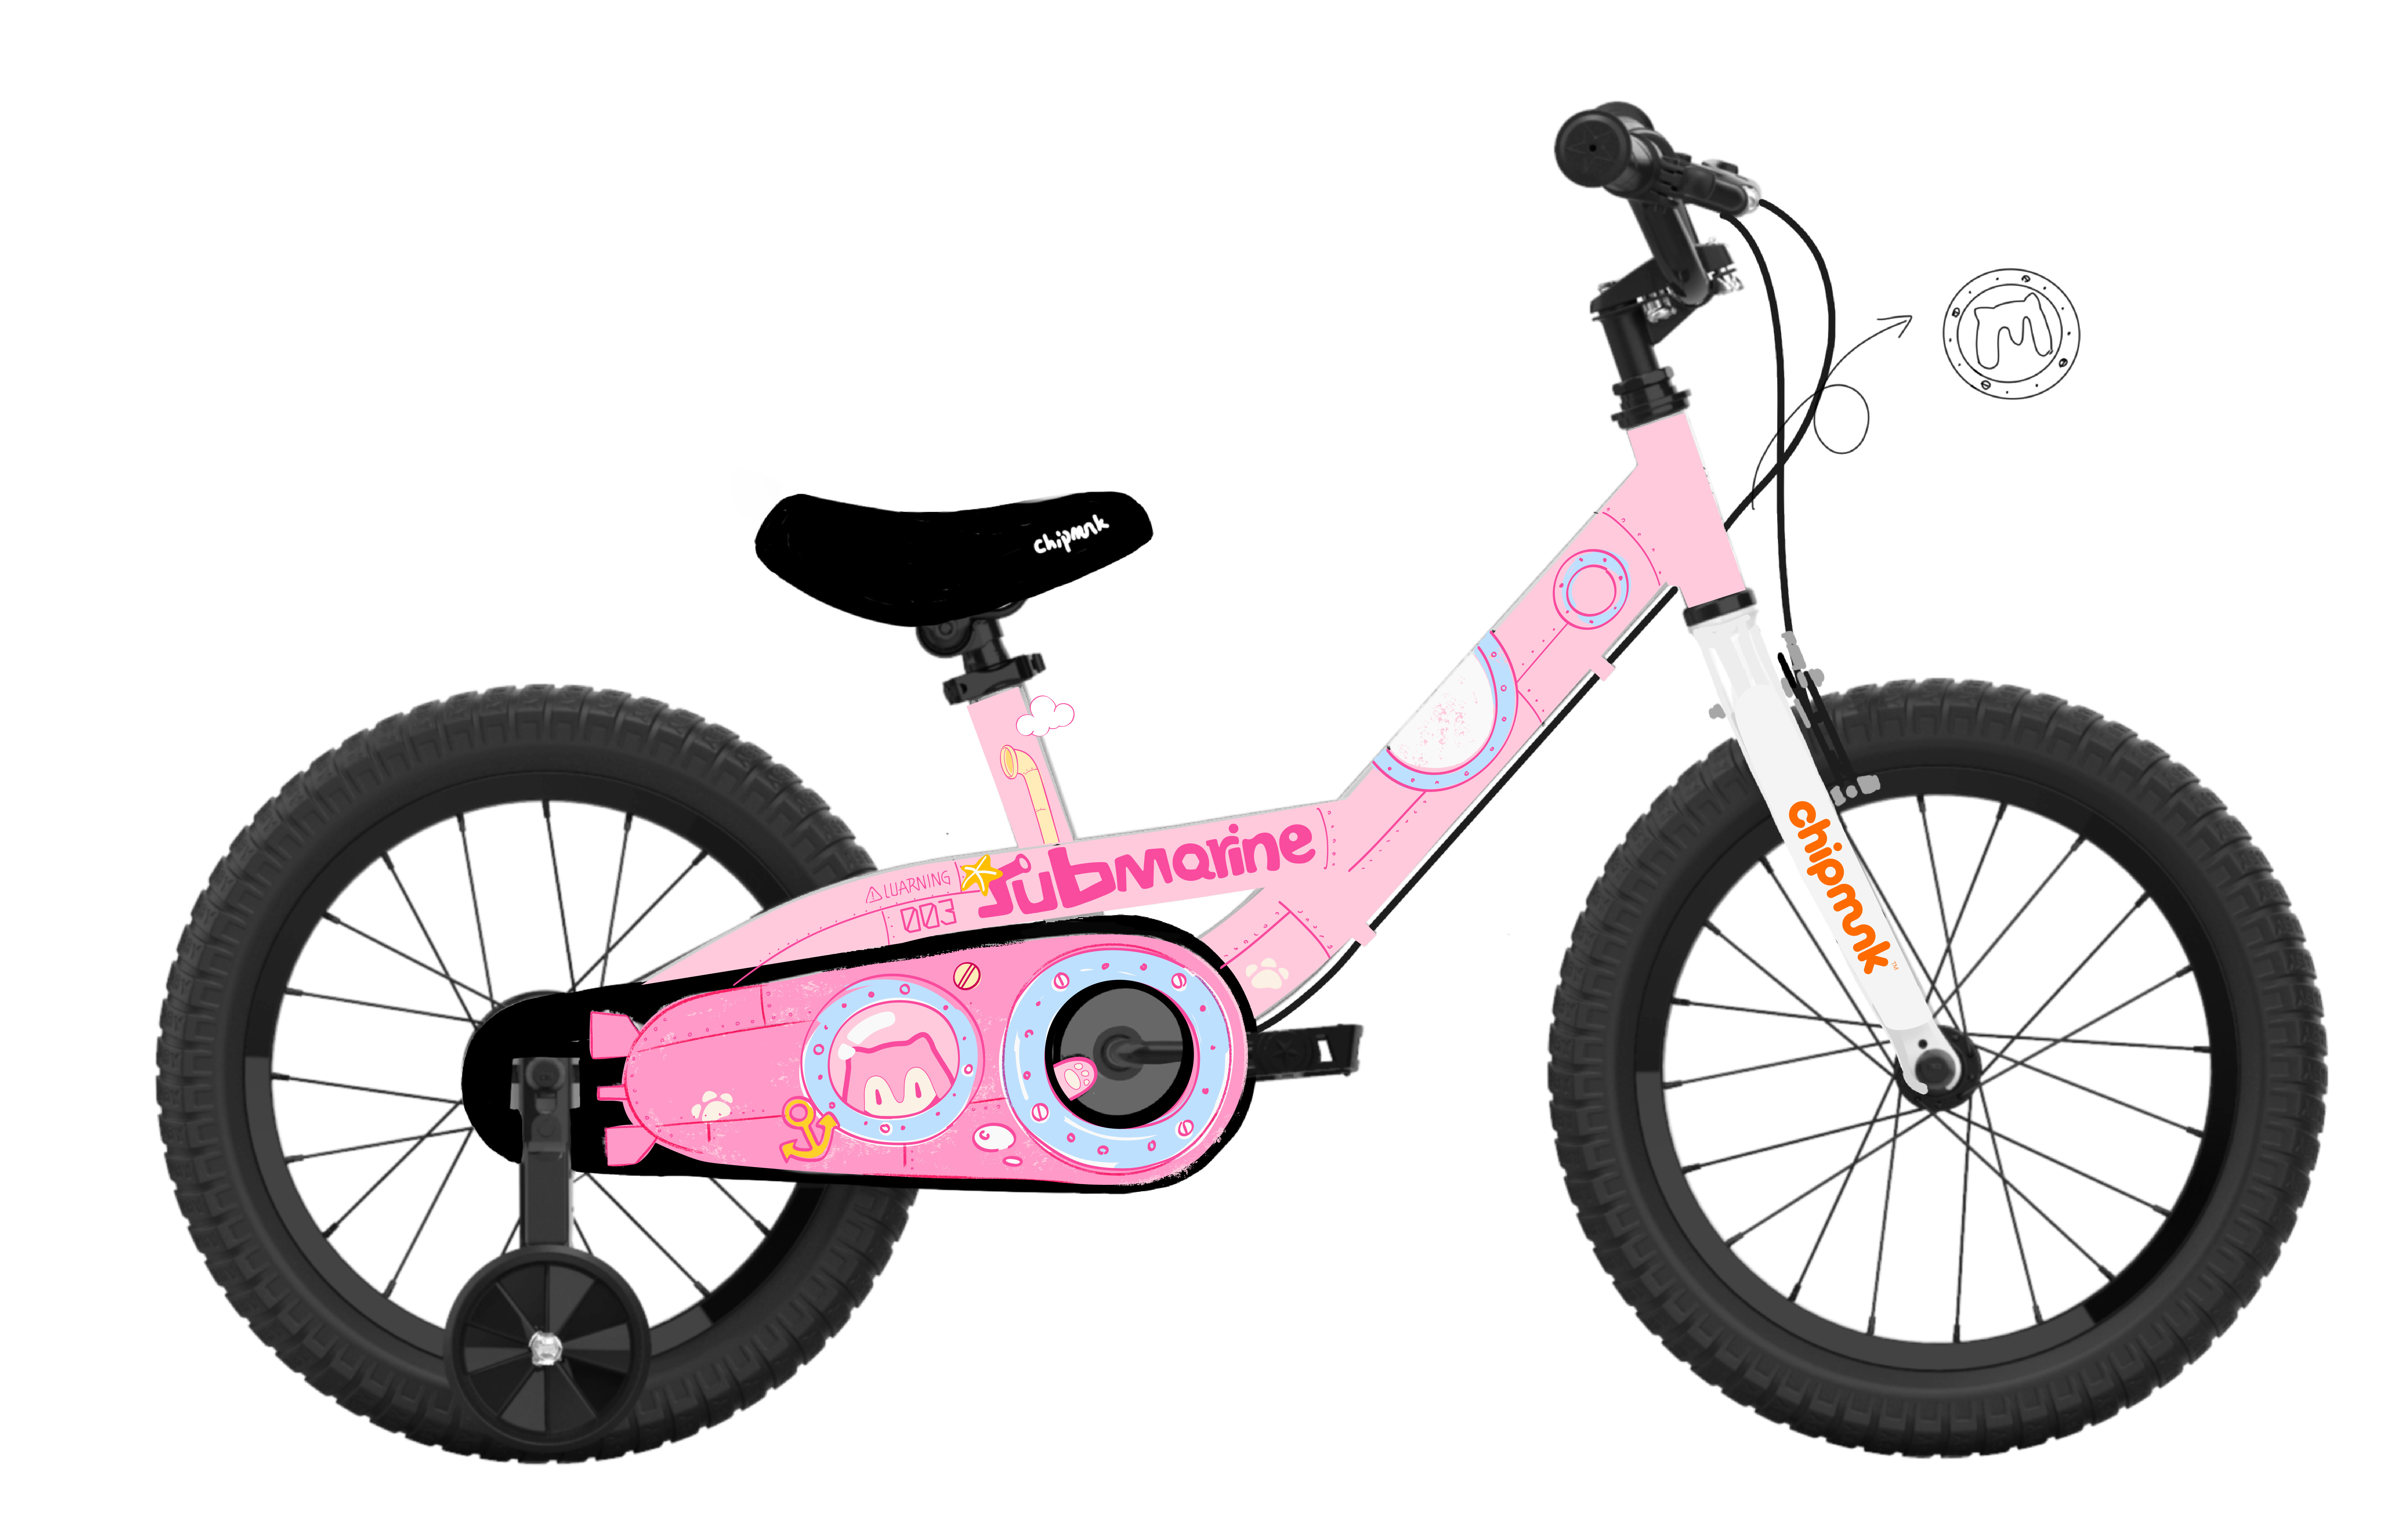 Royal Baby Bicicleta Chipmunk Niña 16 Submarine Rosa